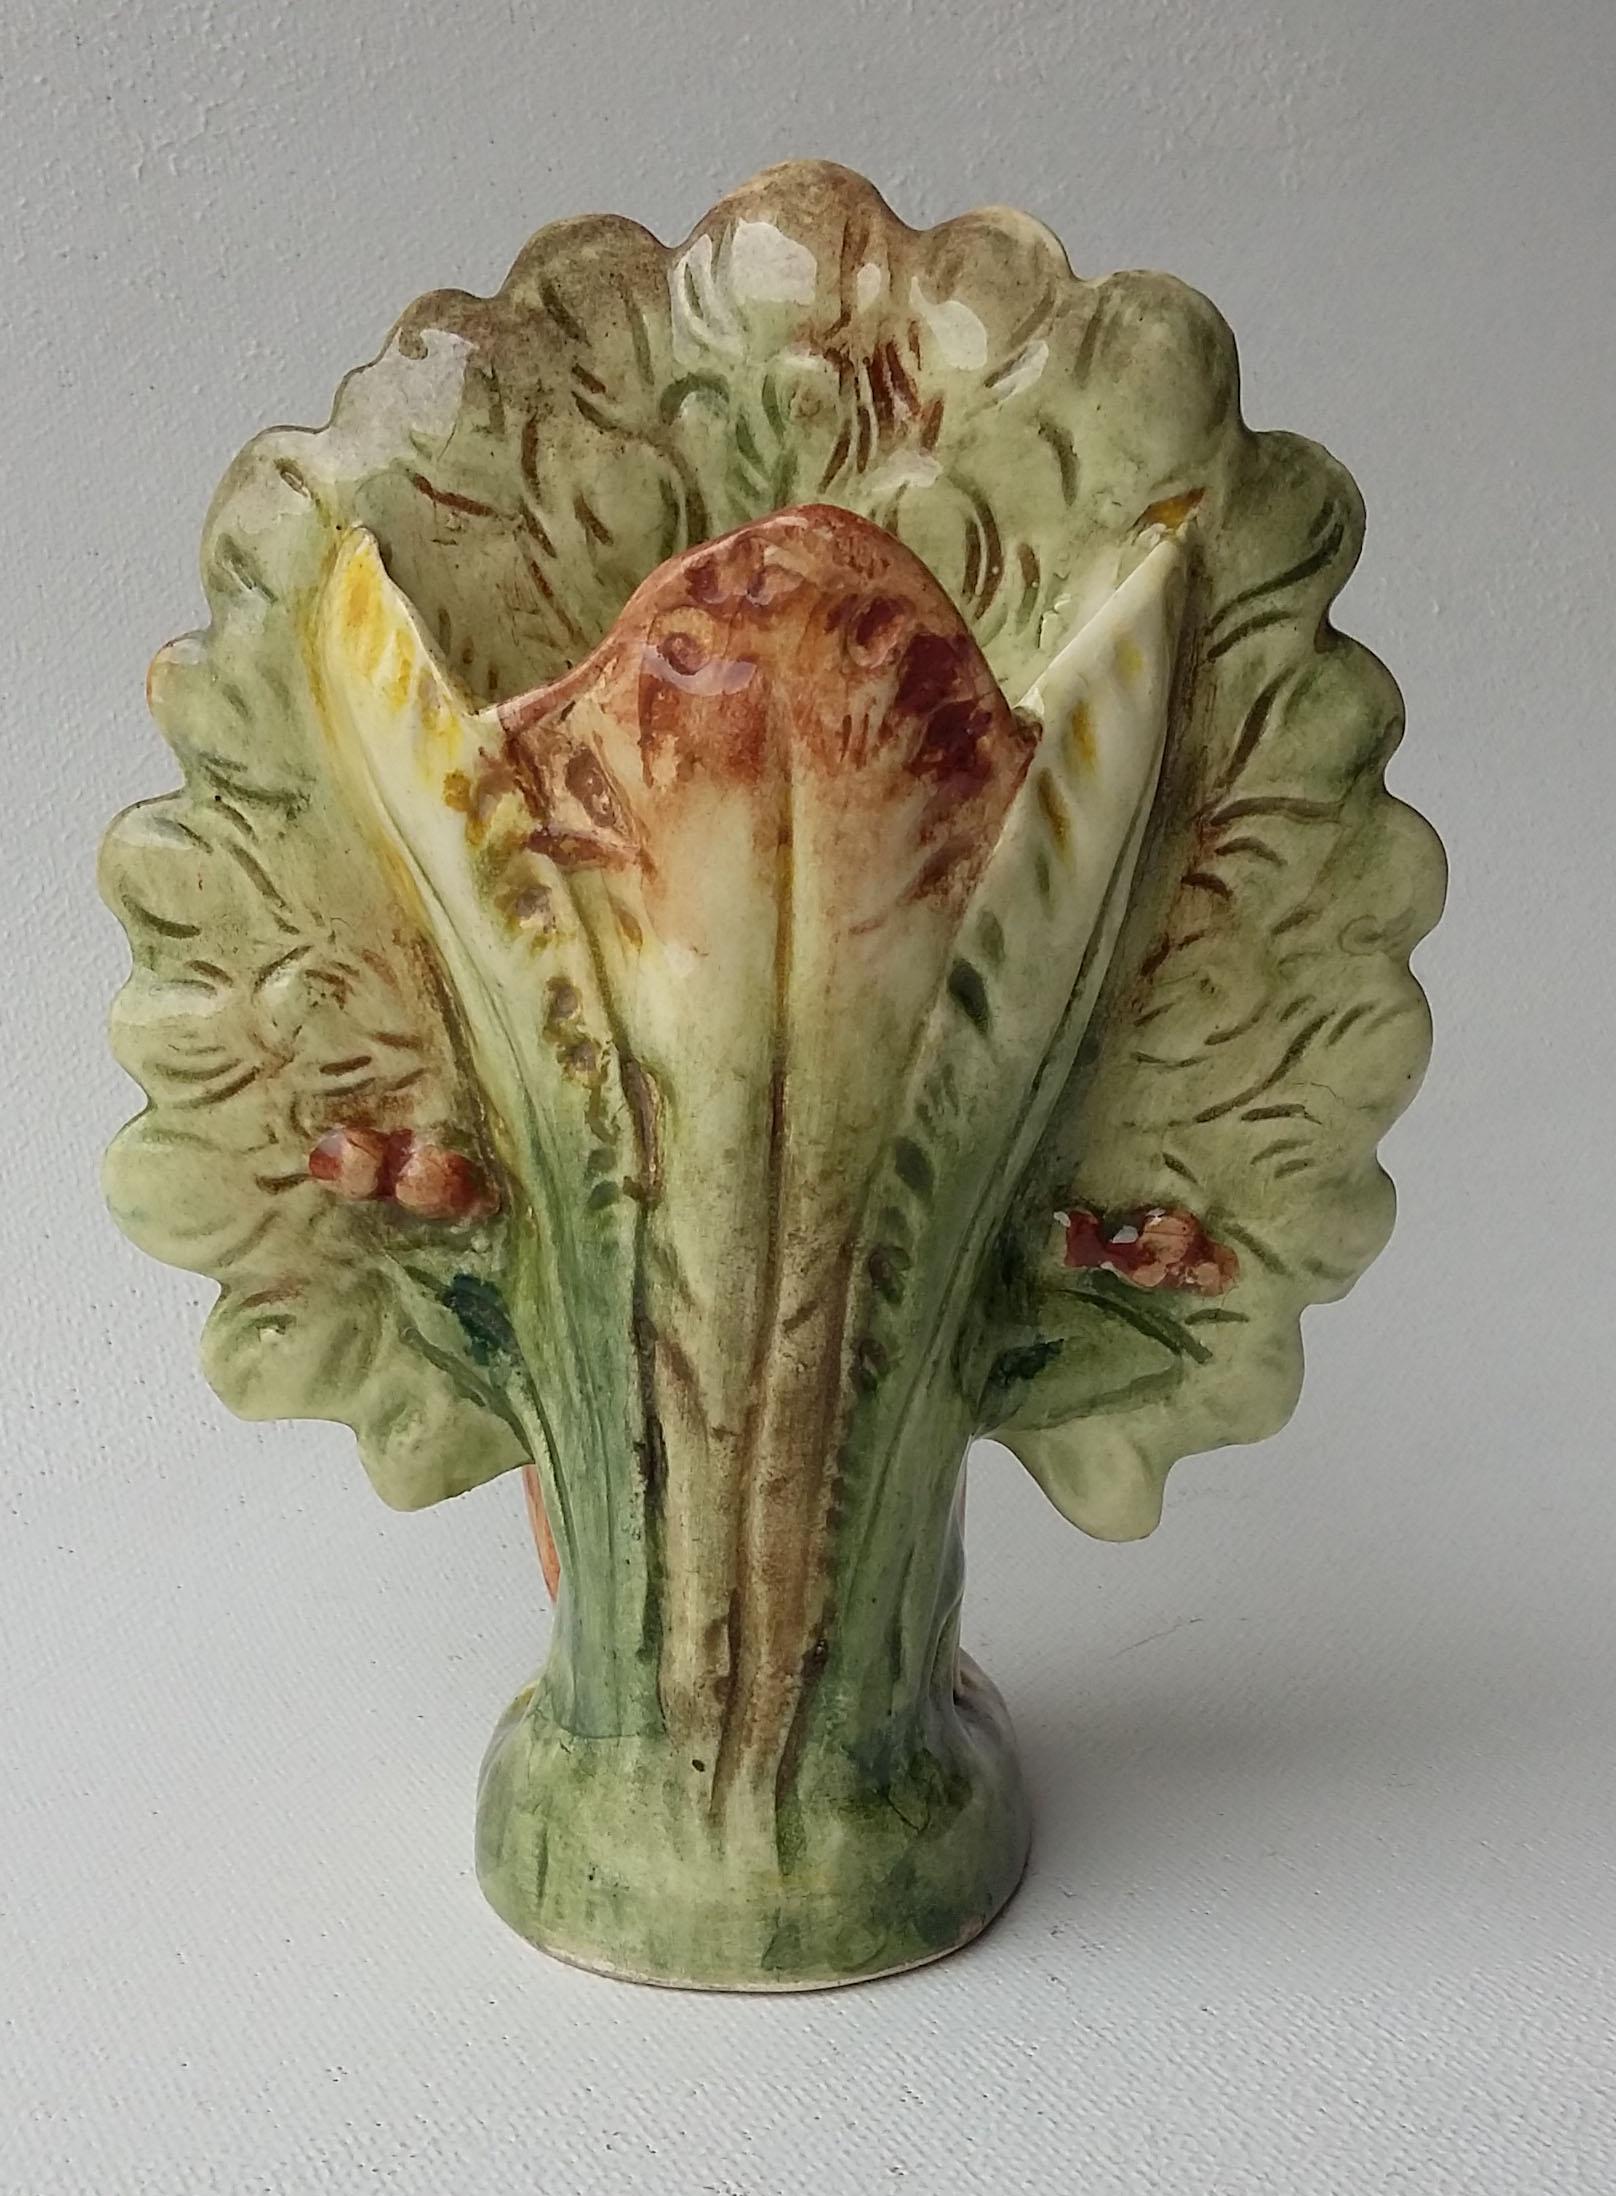 Small Majolica peacock vase, circa 1900 from Czech Republic.